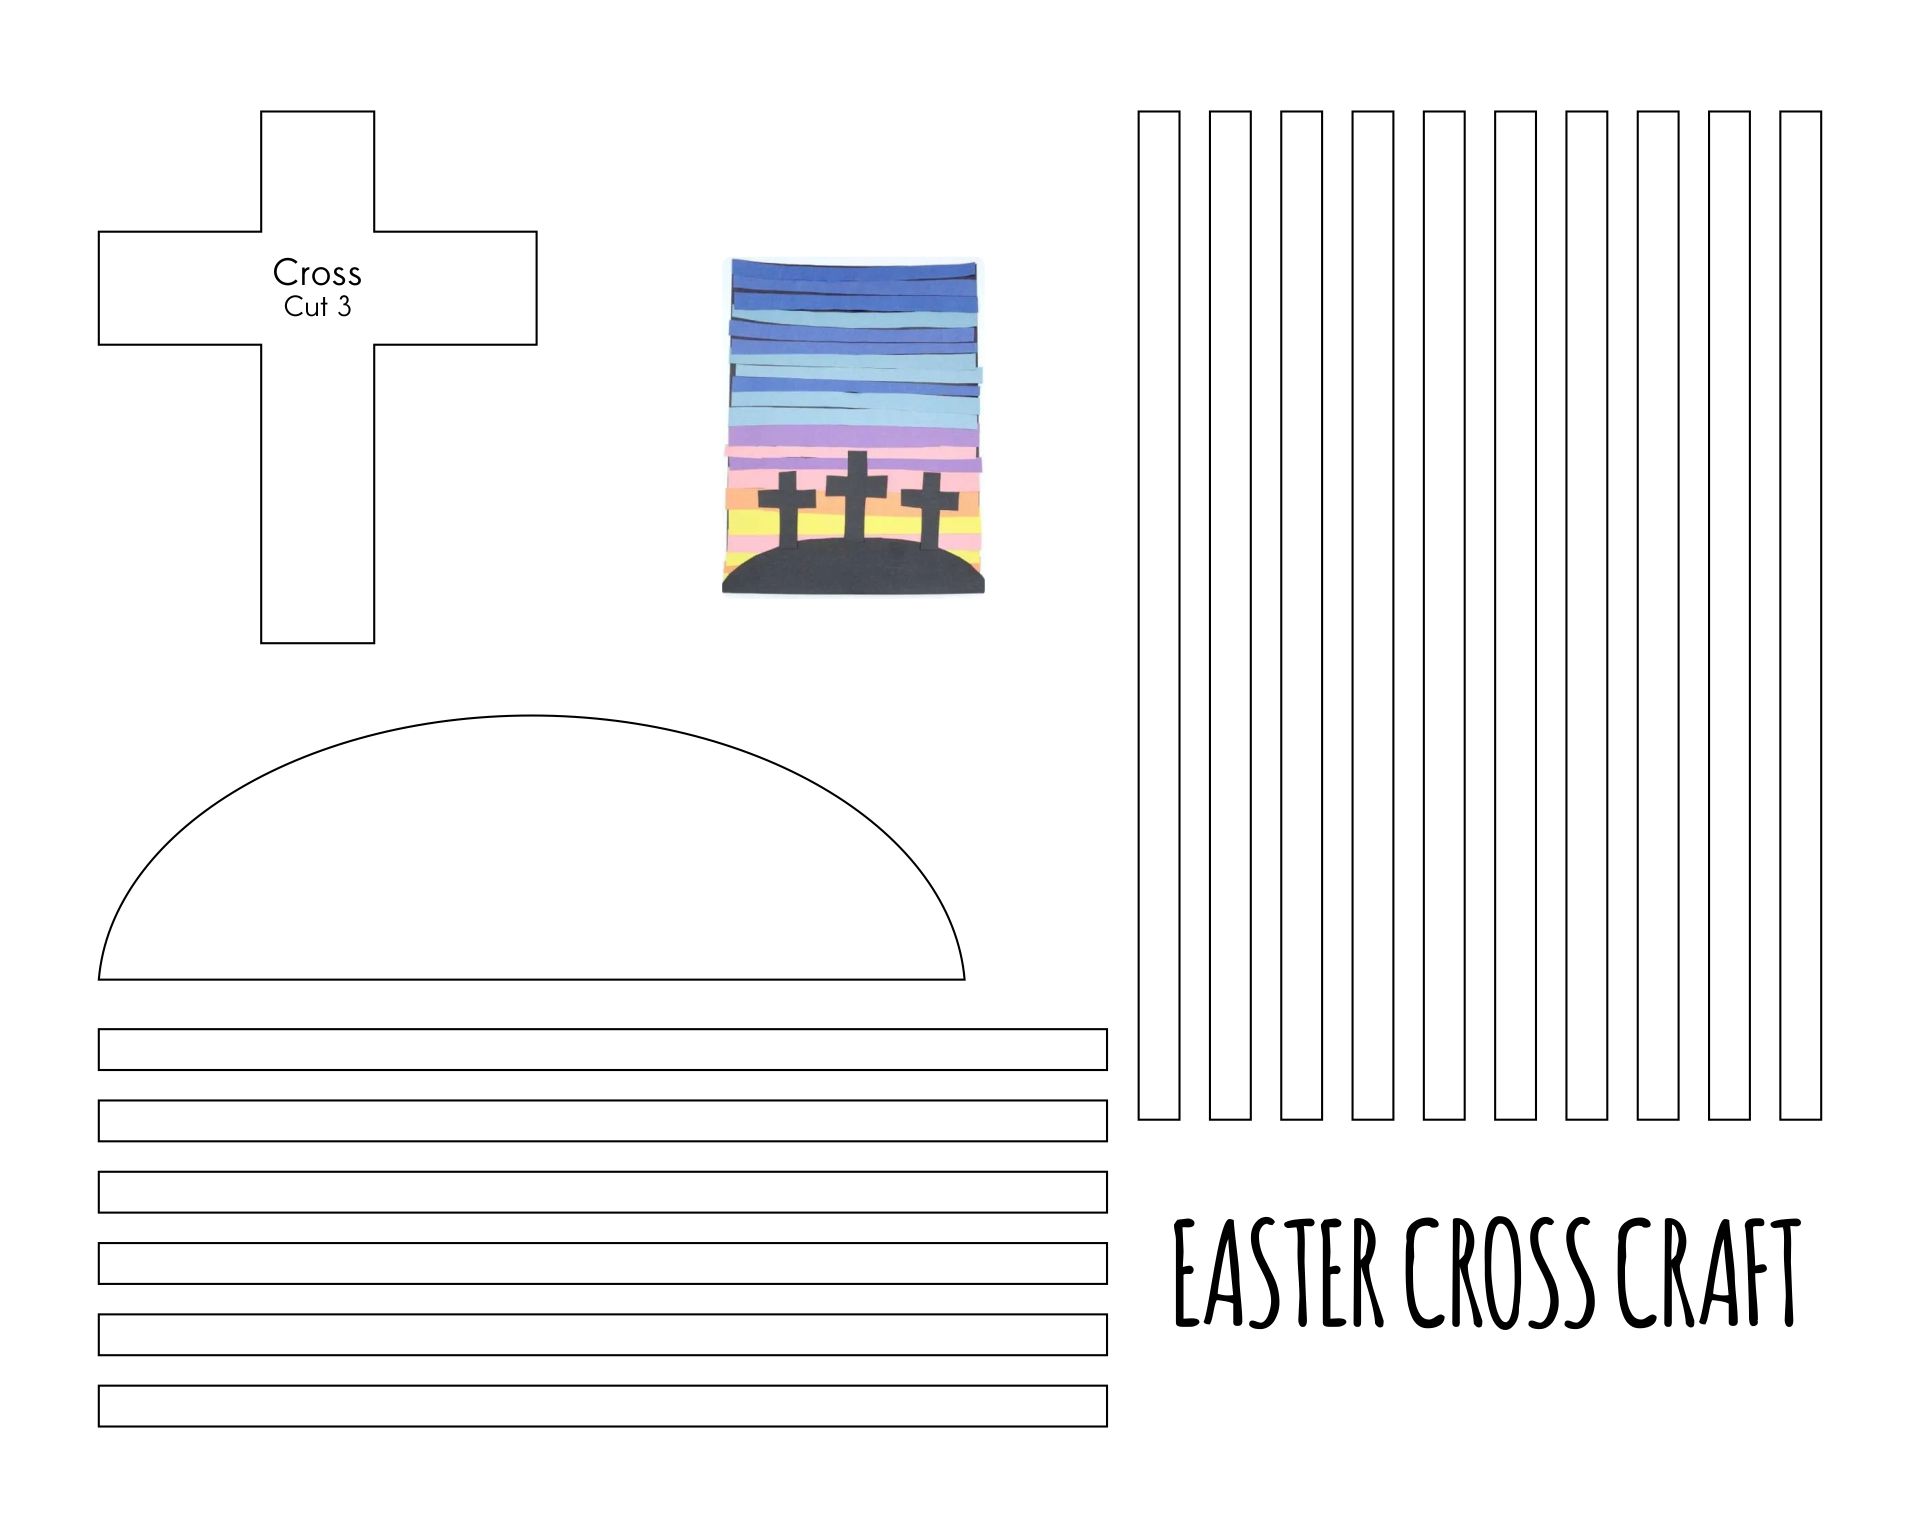 Christian Easter Crafts for Children